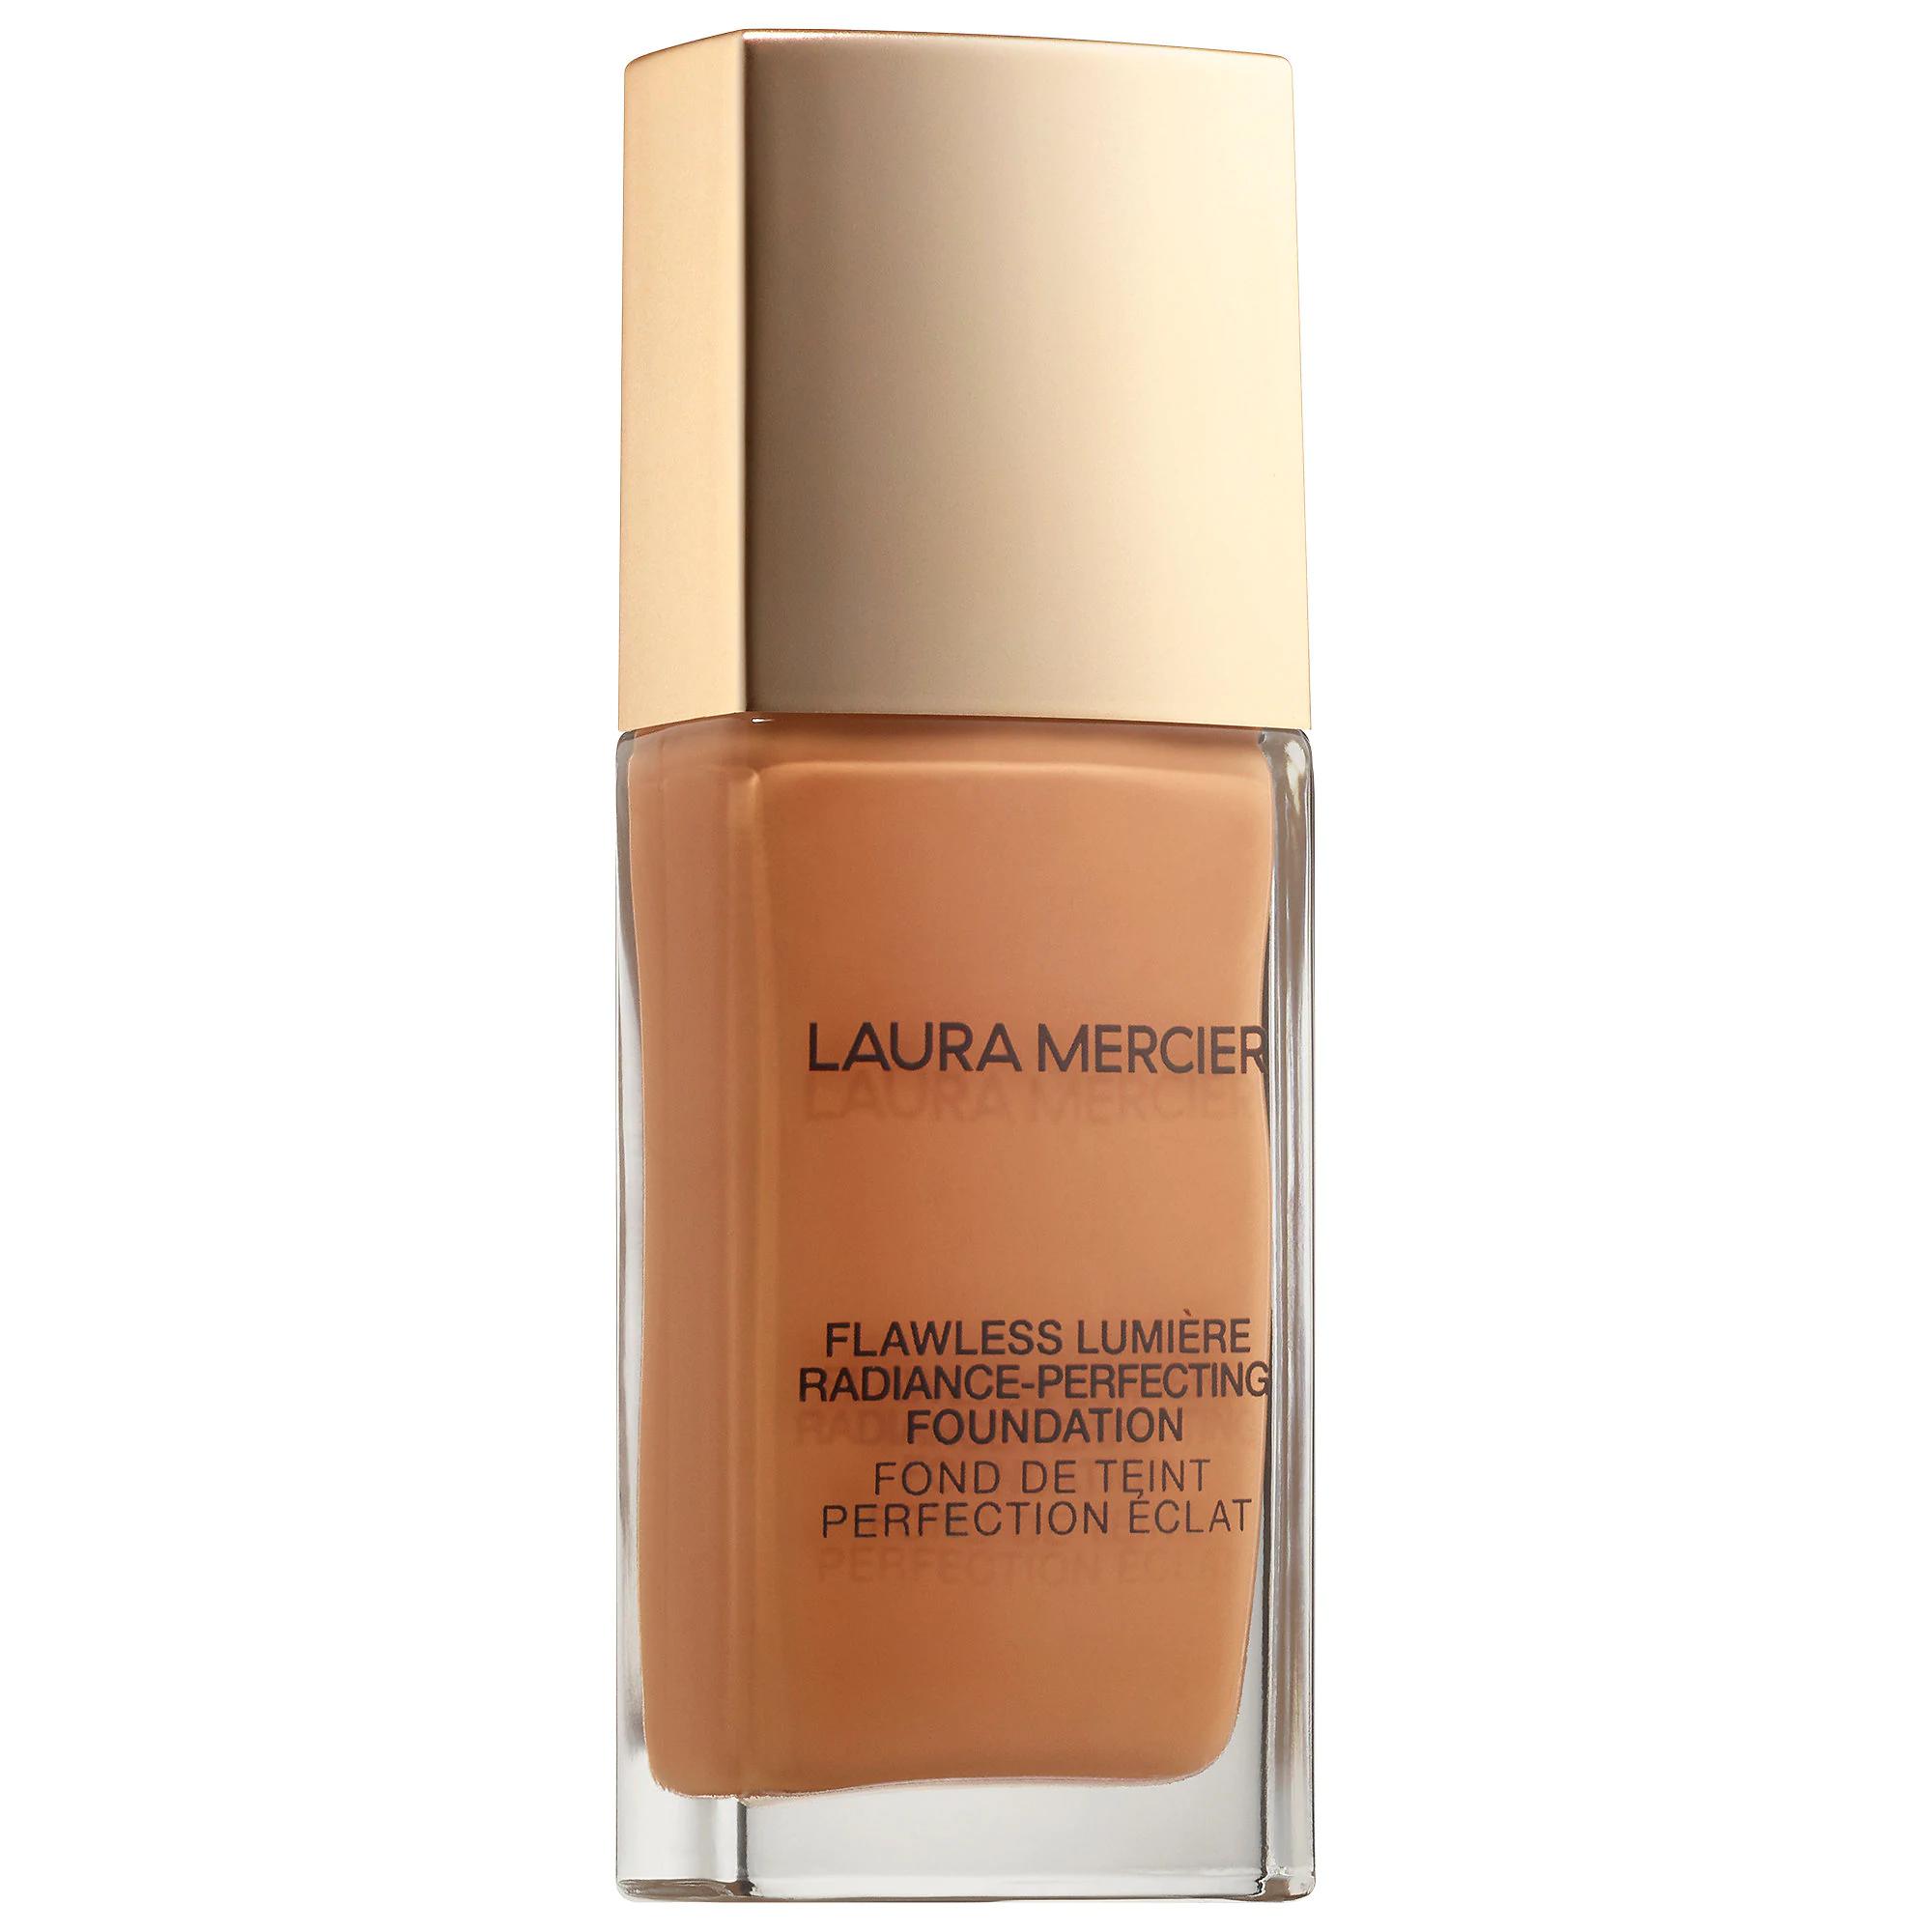 Laura Mercier Flawless Lumiere Radiance-Perfecting Foundation Hazelnut 5N2